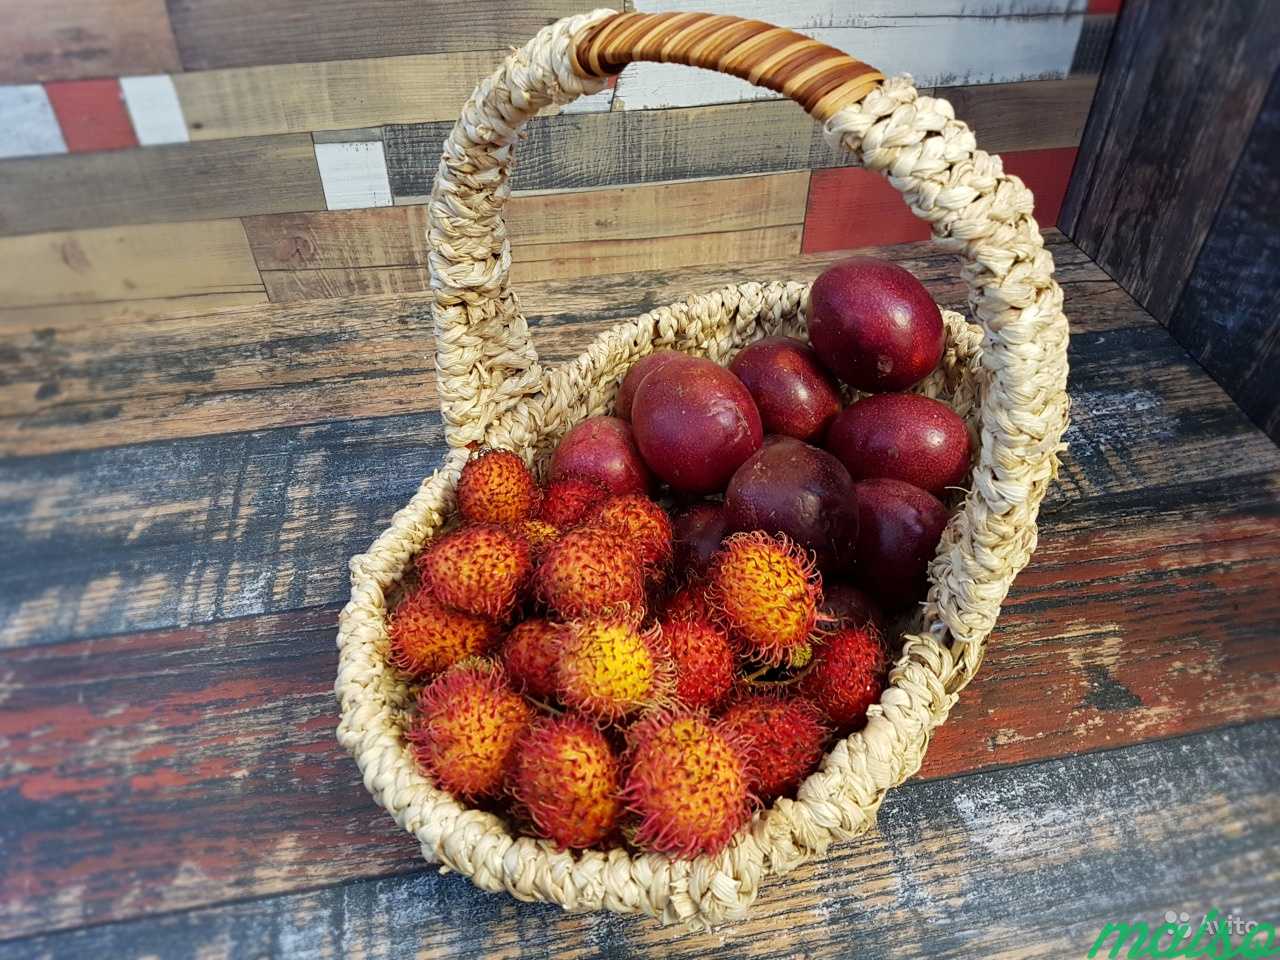 Корзина фруктов из тайланда